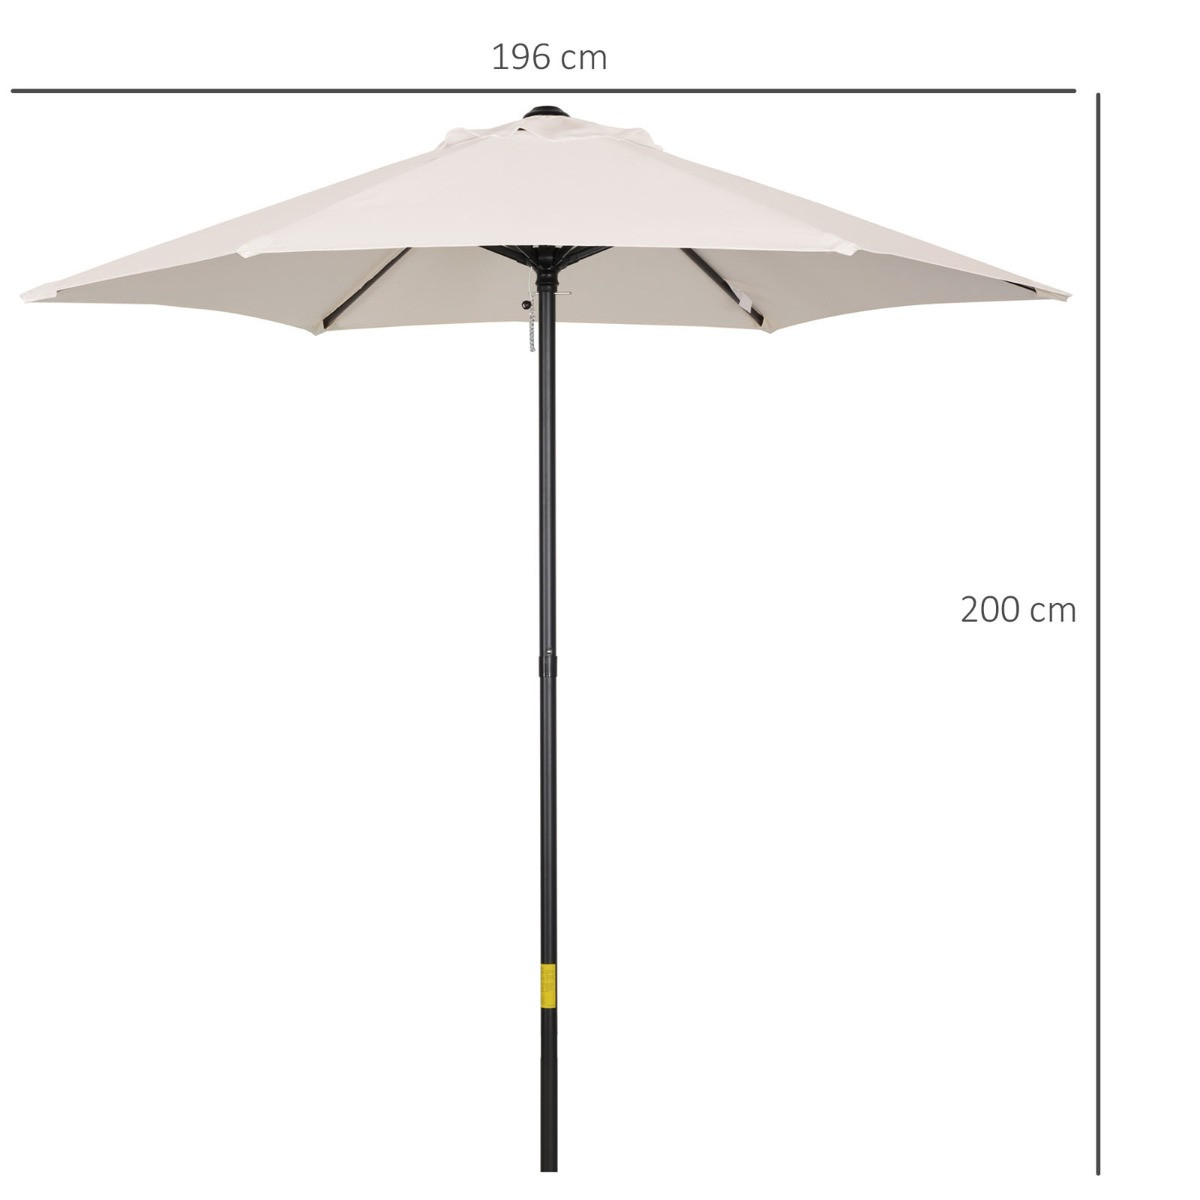 Outsunny Patio Parasol Umbrella, Cream - 1.96m>